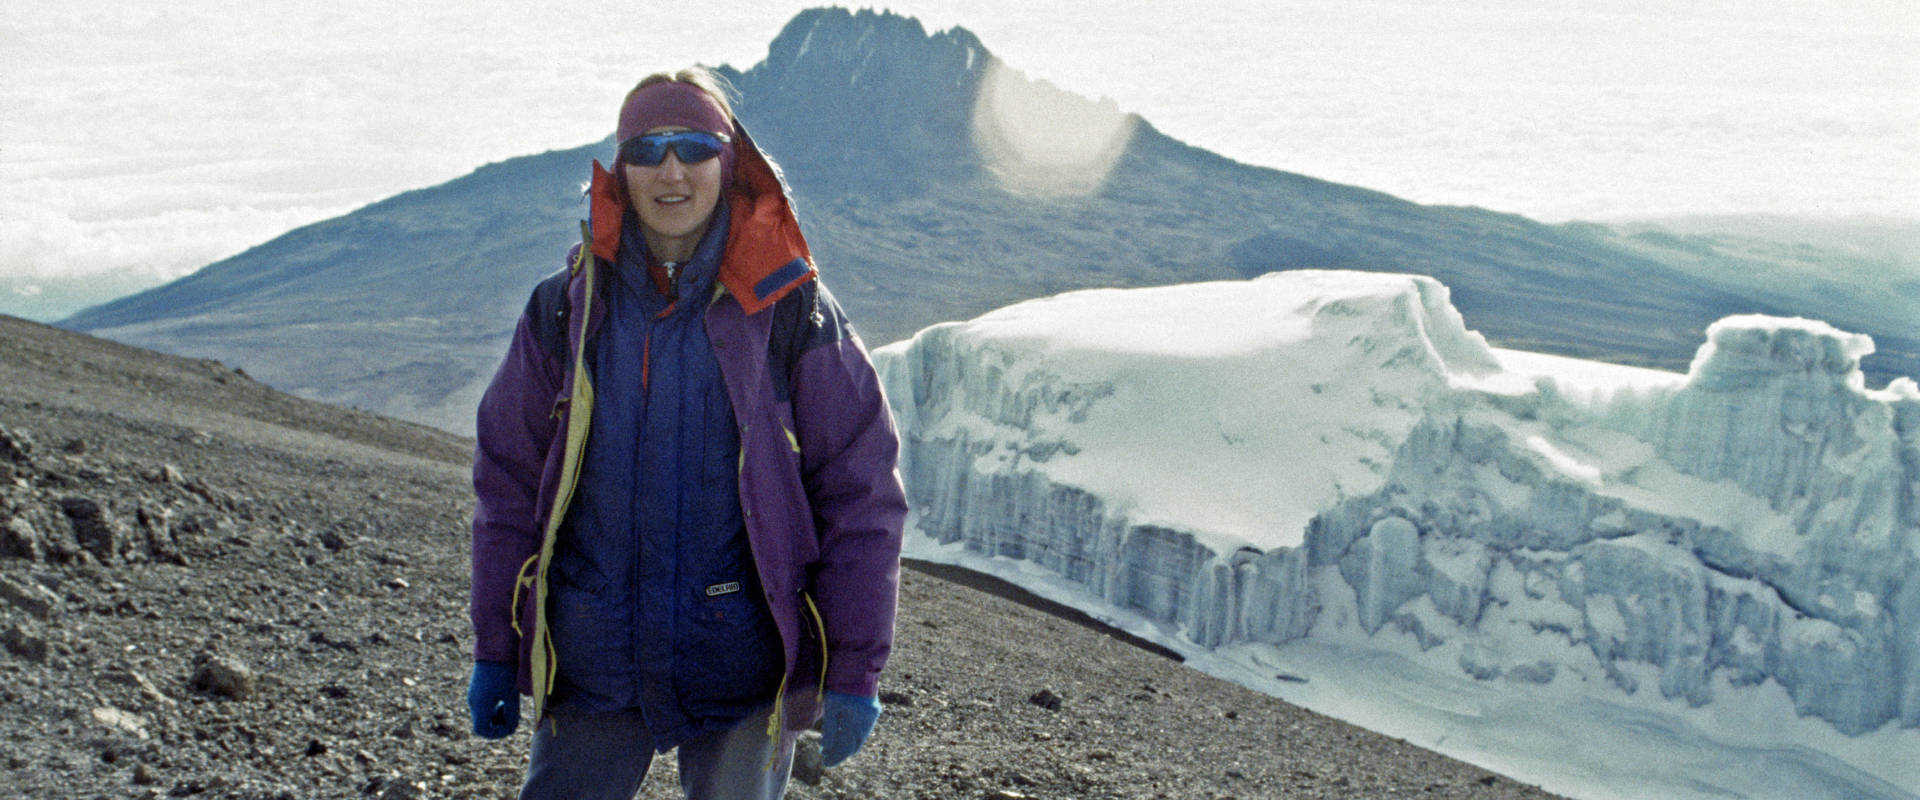 Cathy O'Dowd in Kilimanjaro